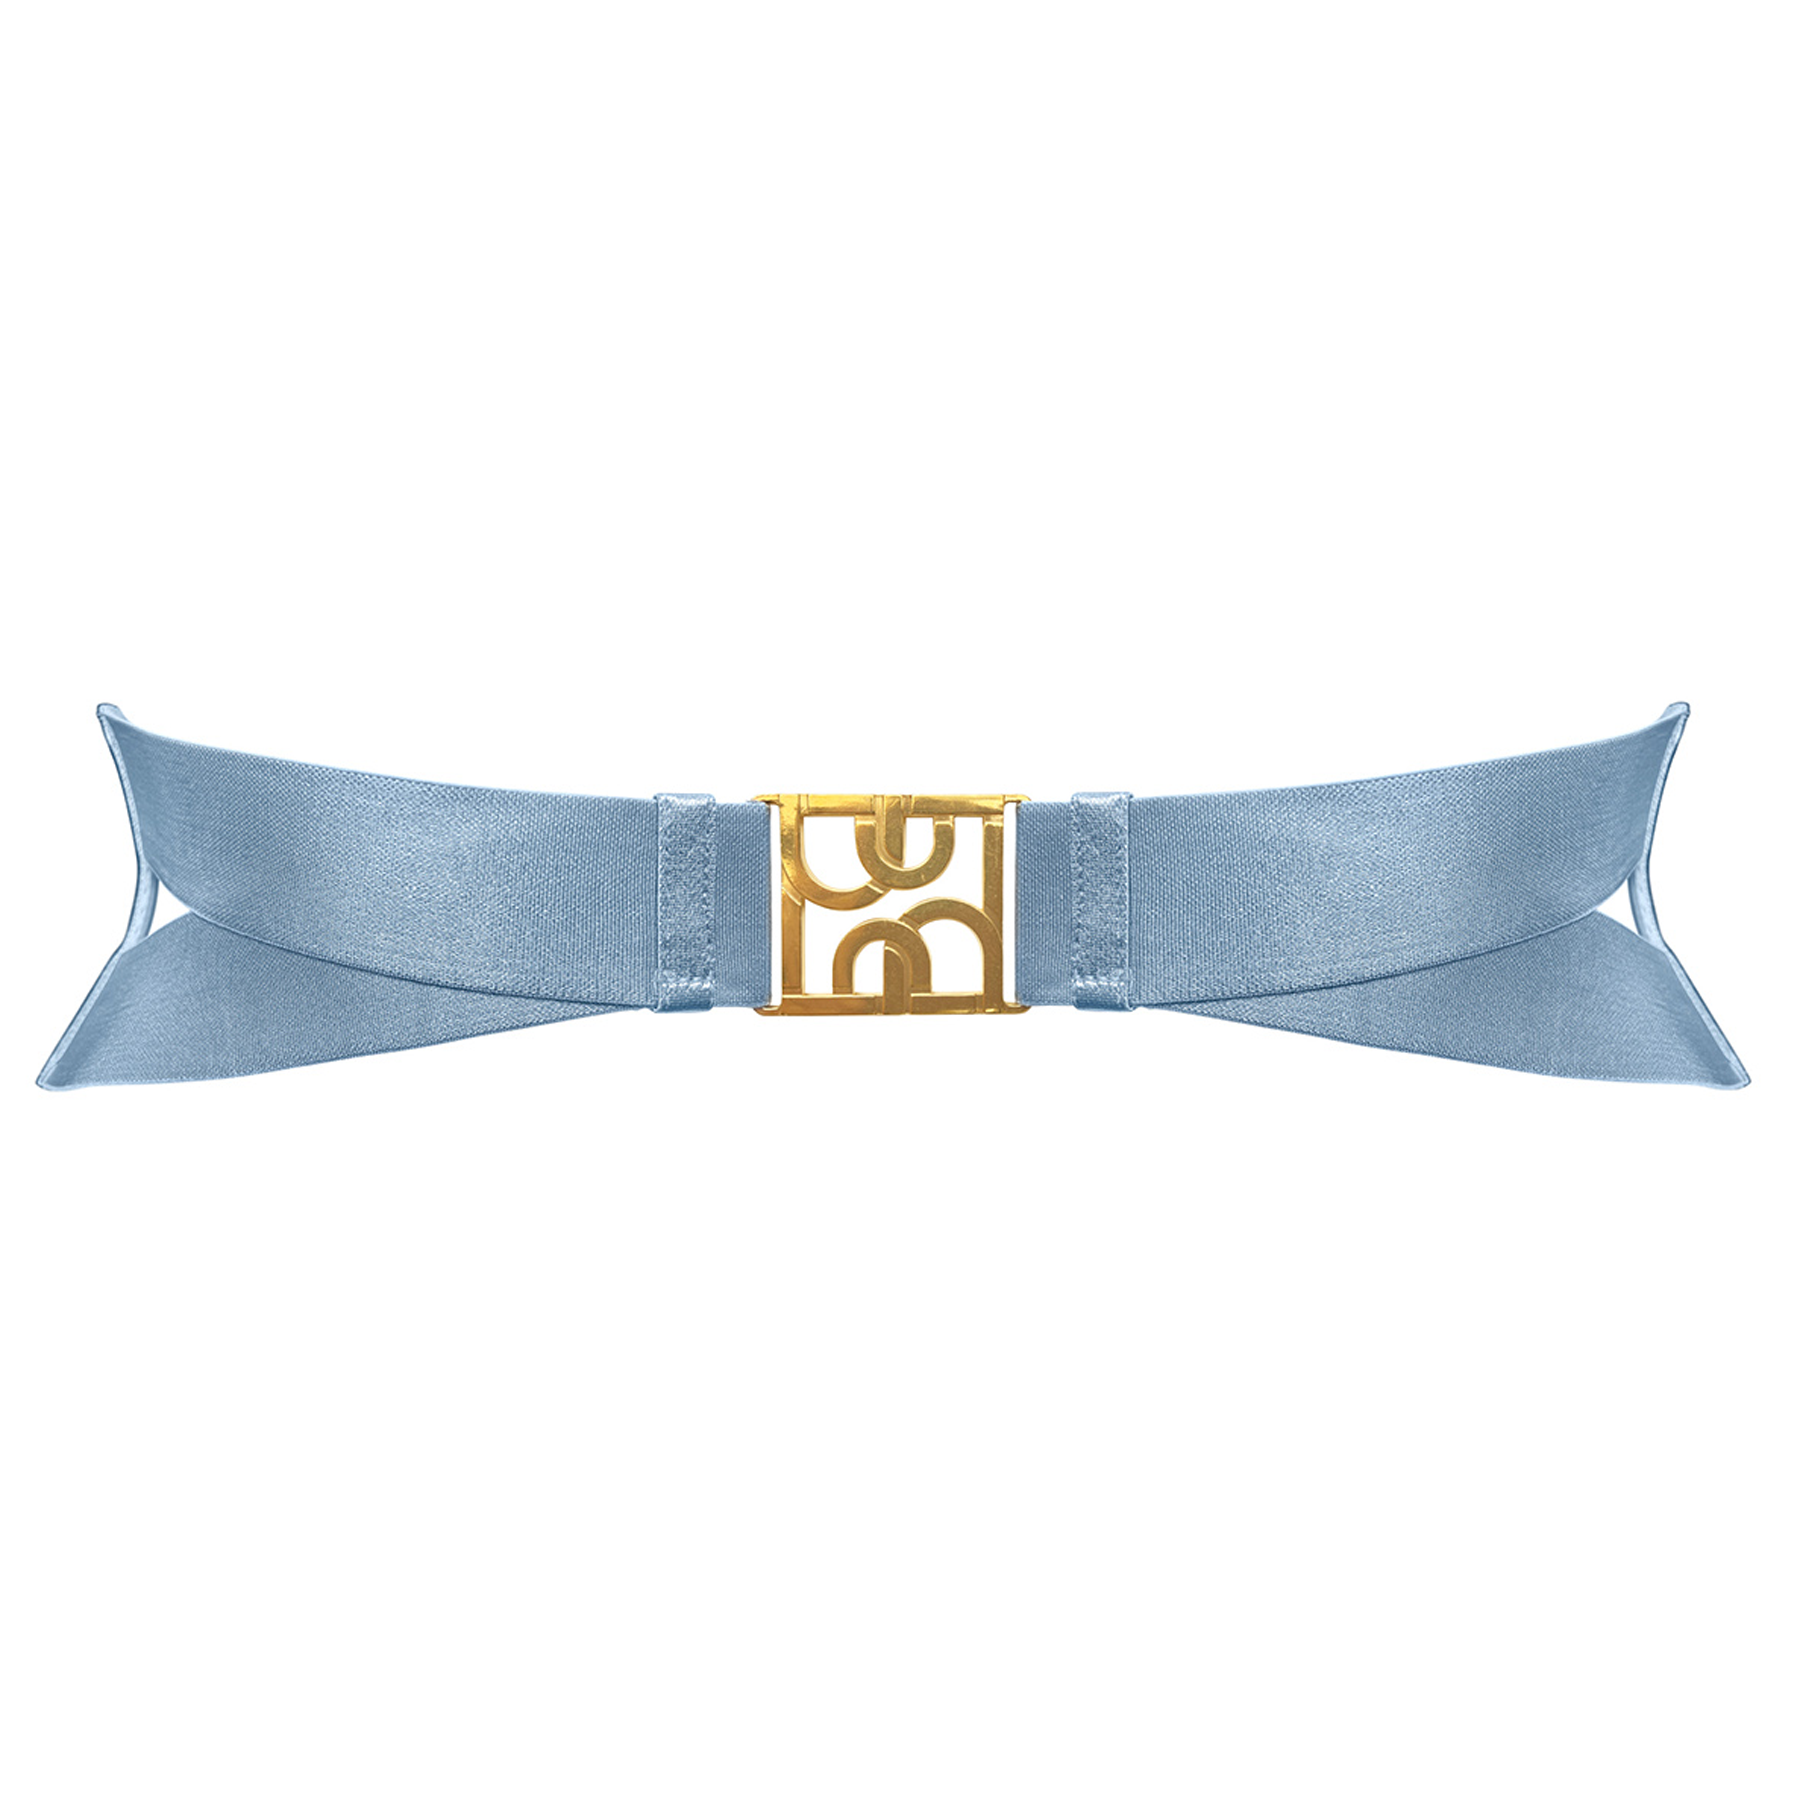 Bordelle Vero adjustable belt in Dusty Blue